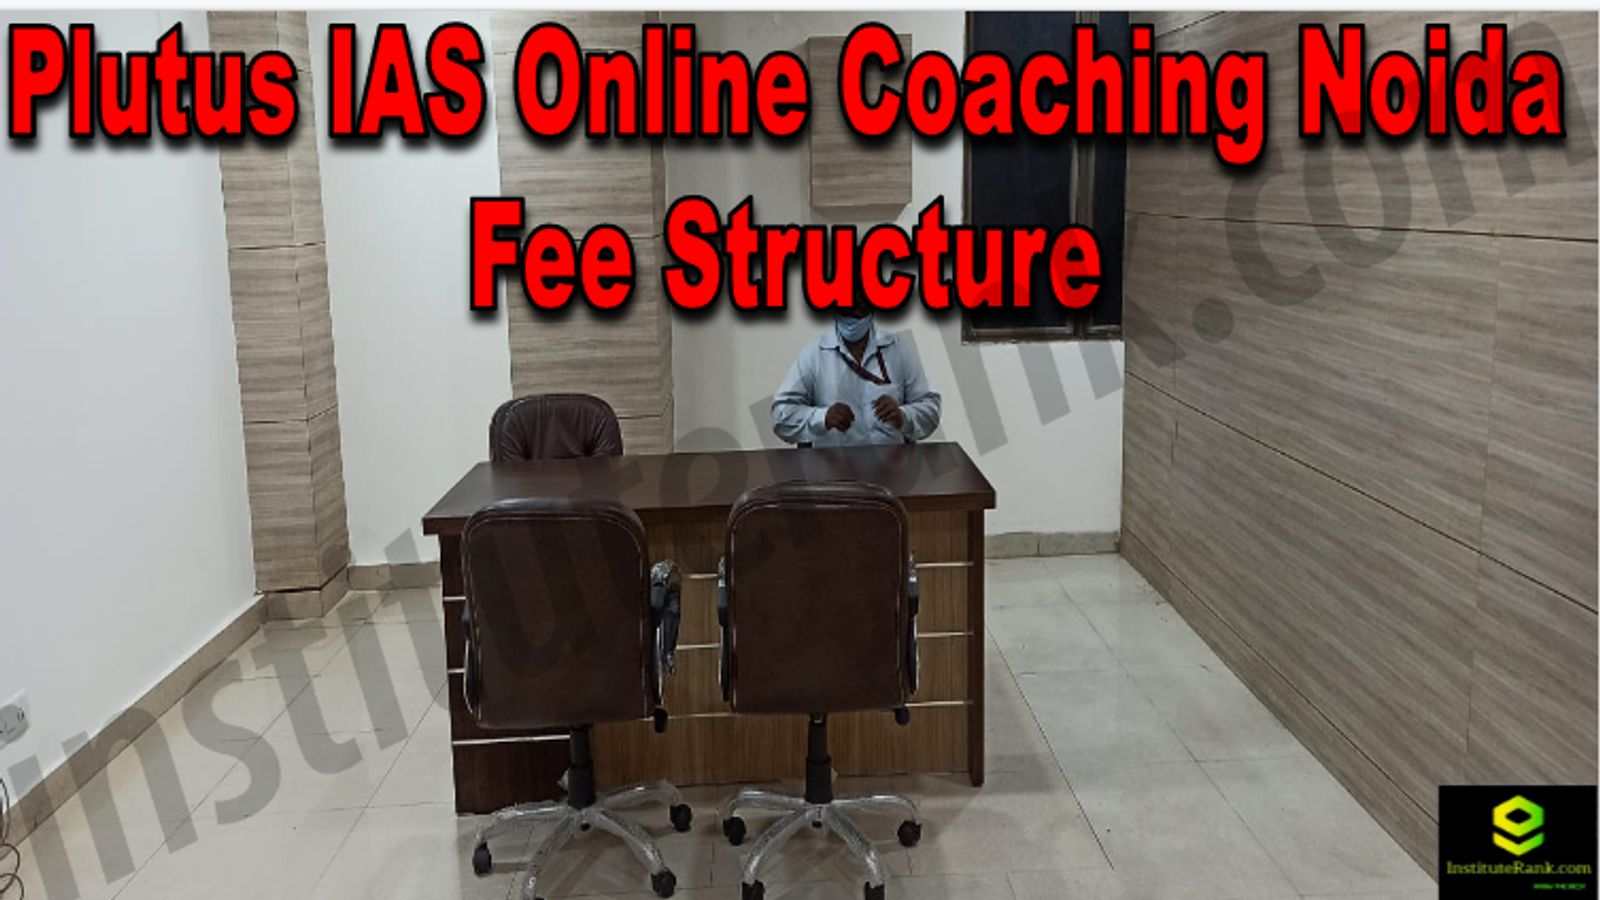 Plutus IAS Online Coaching Noida Reviews Fee Structure